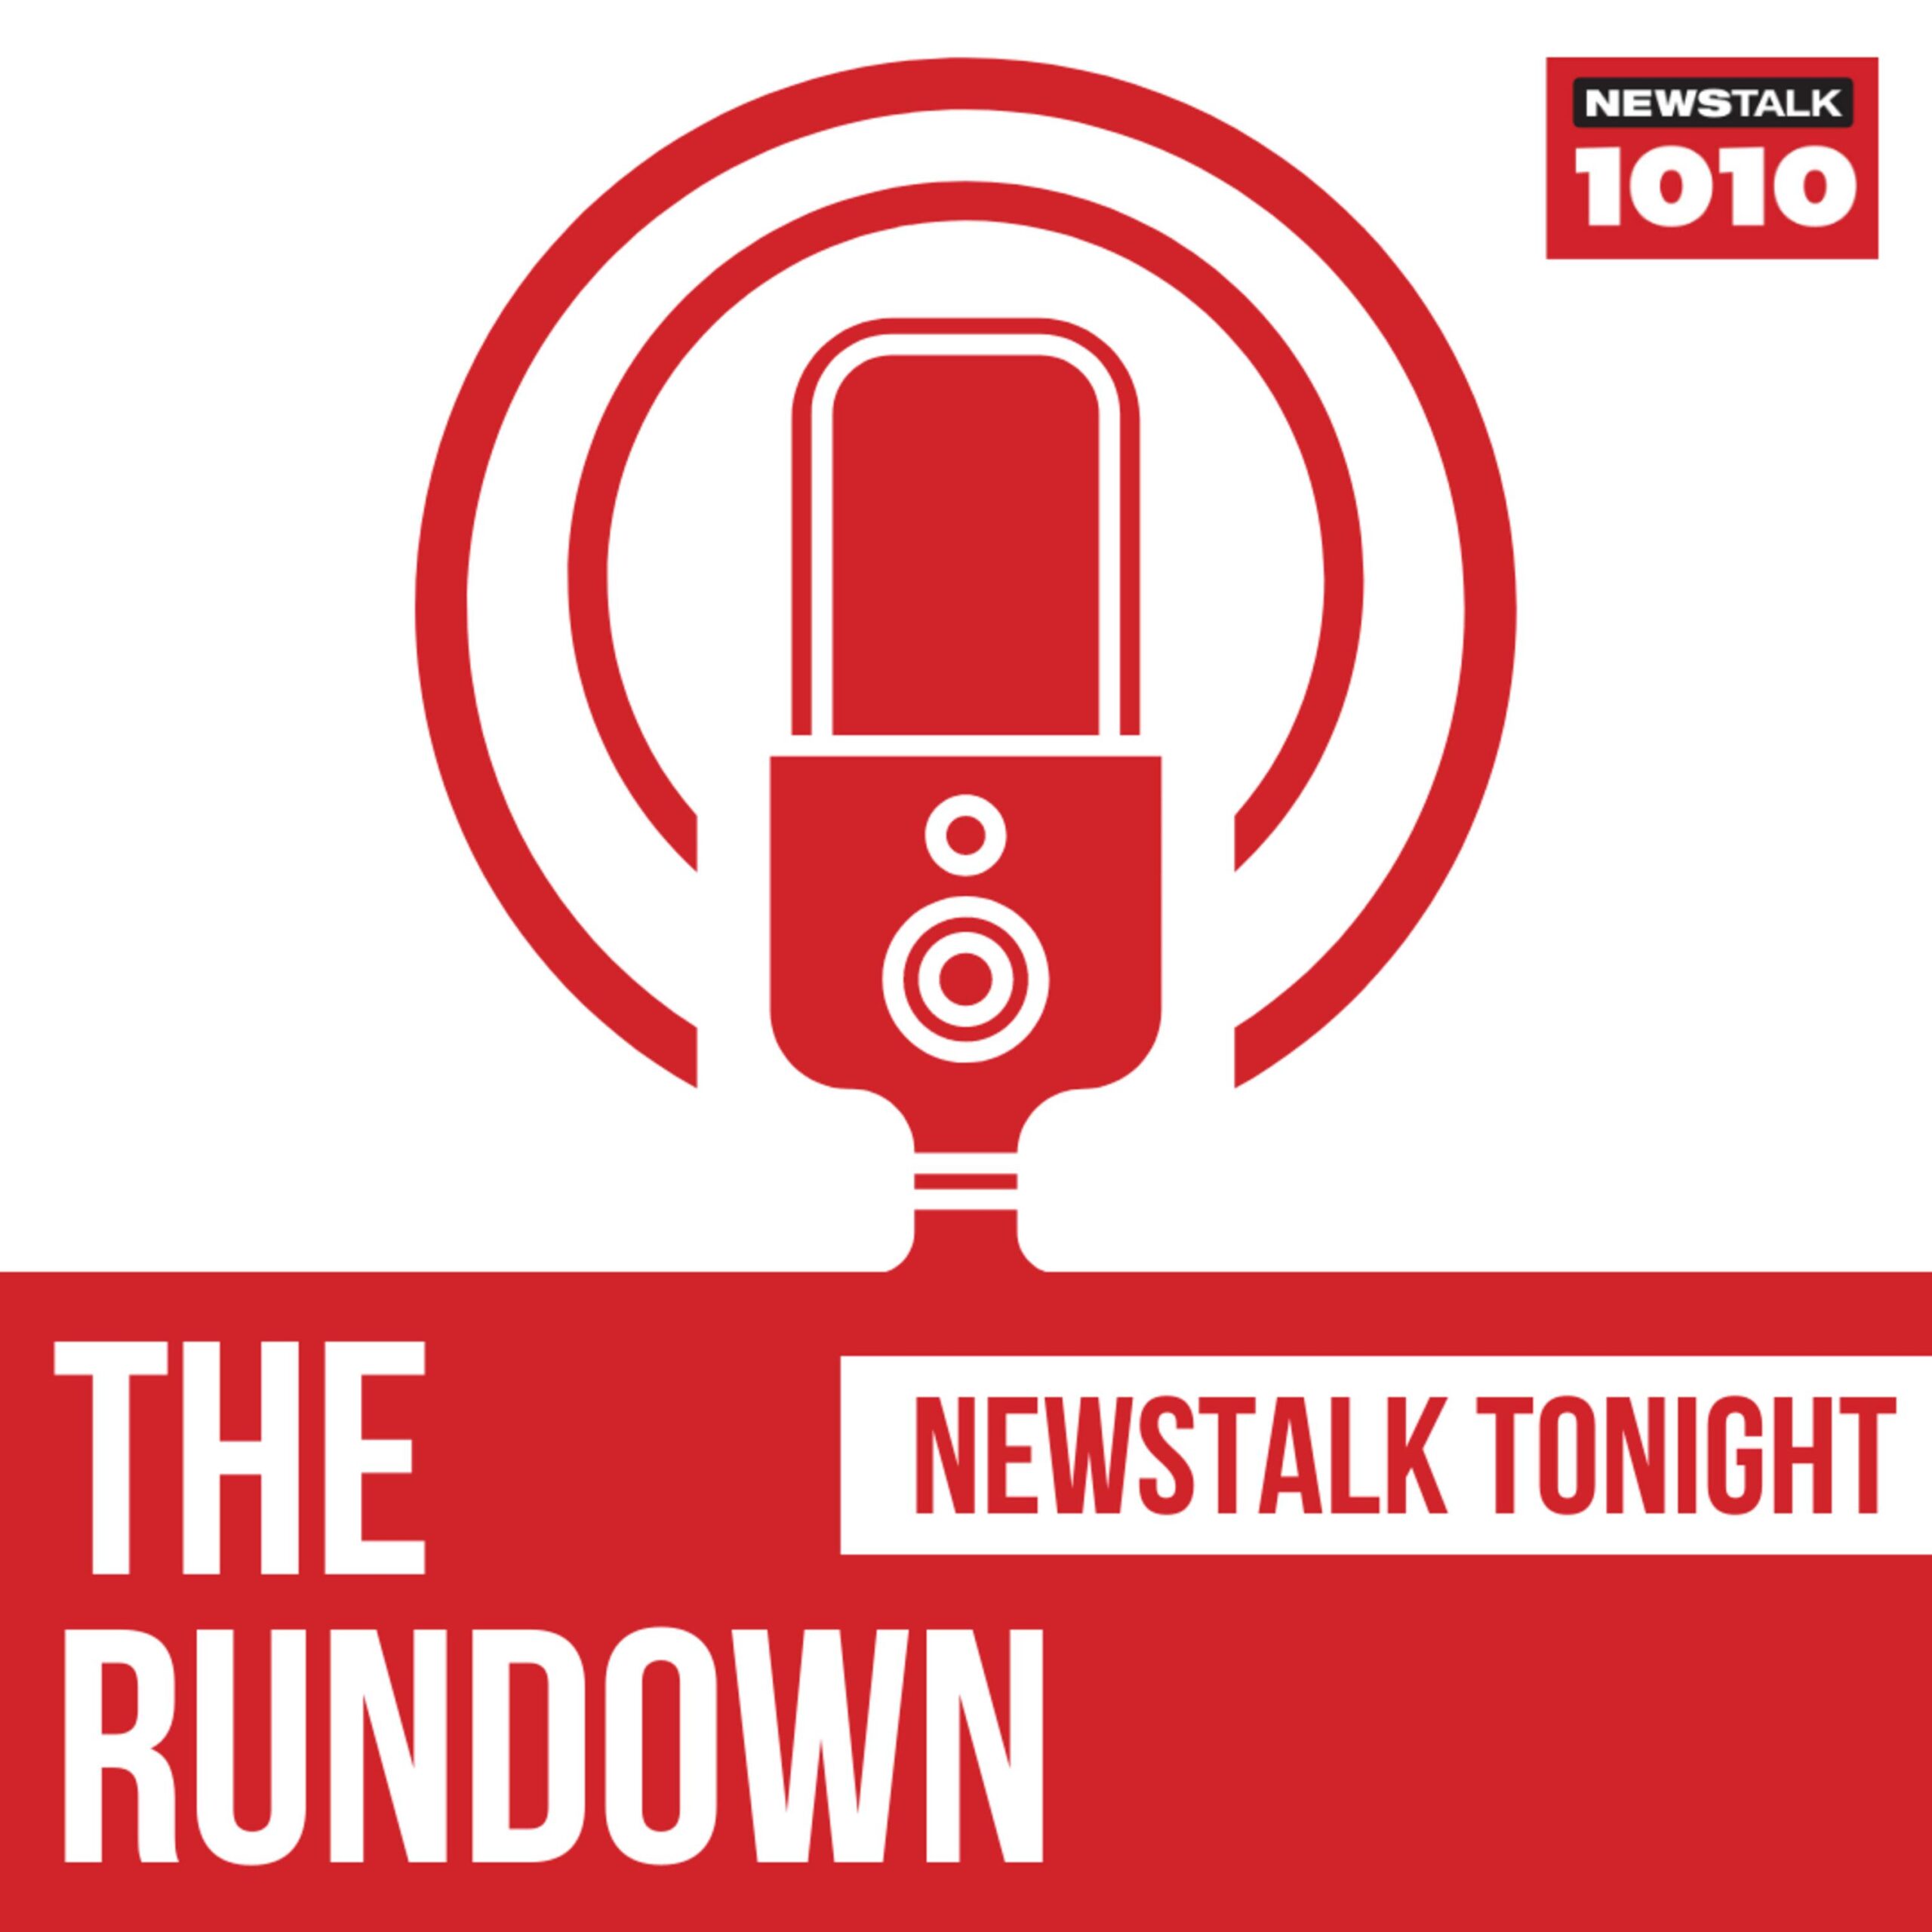 Newstalk 1010: Jim Richards’ The Rundown with Jon Liedtke and Mark Mendelson